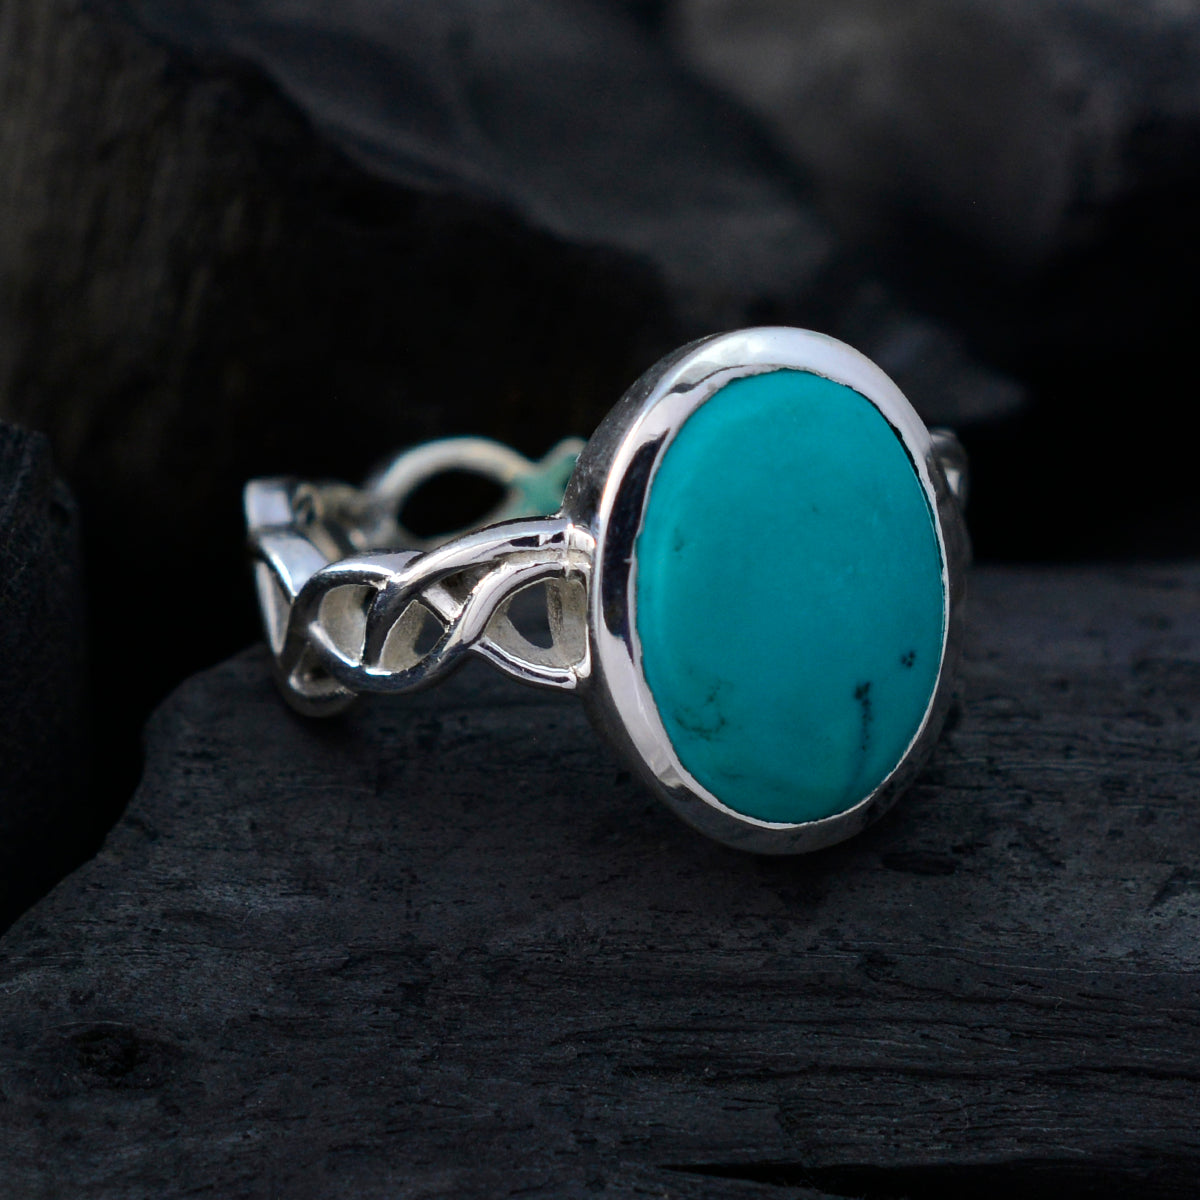 Riyo Rajasthan steen turquoise massief zilveren ring pootafdruk sieraden